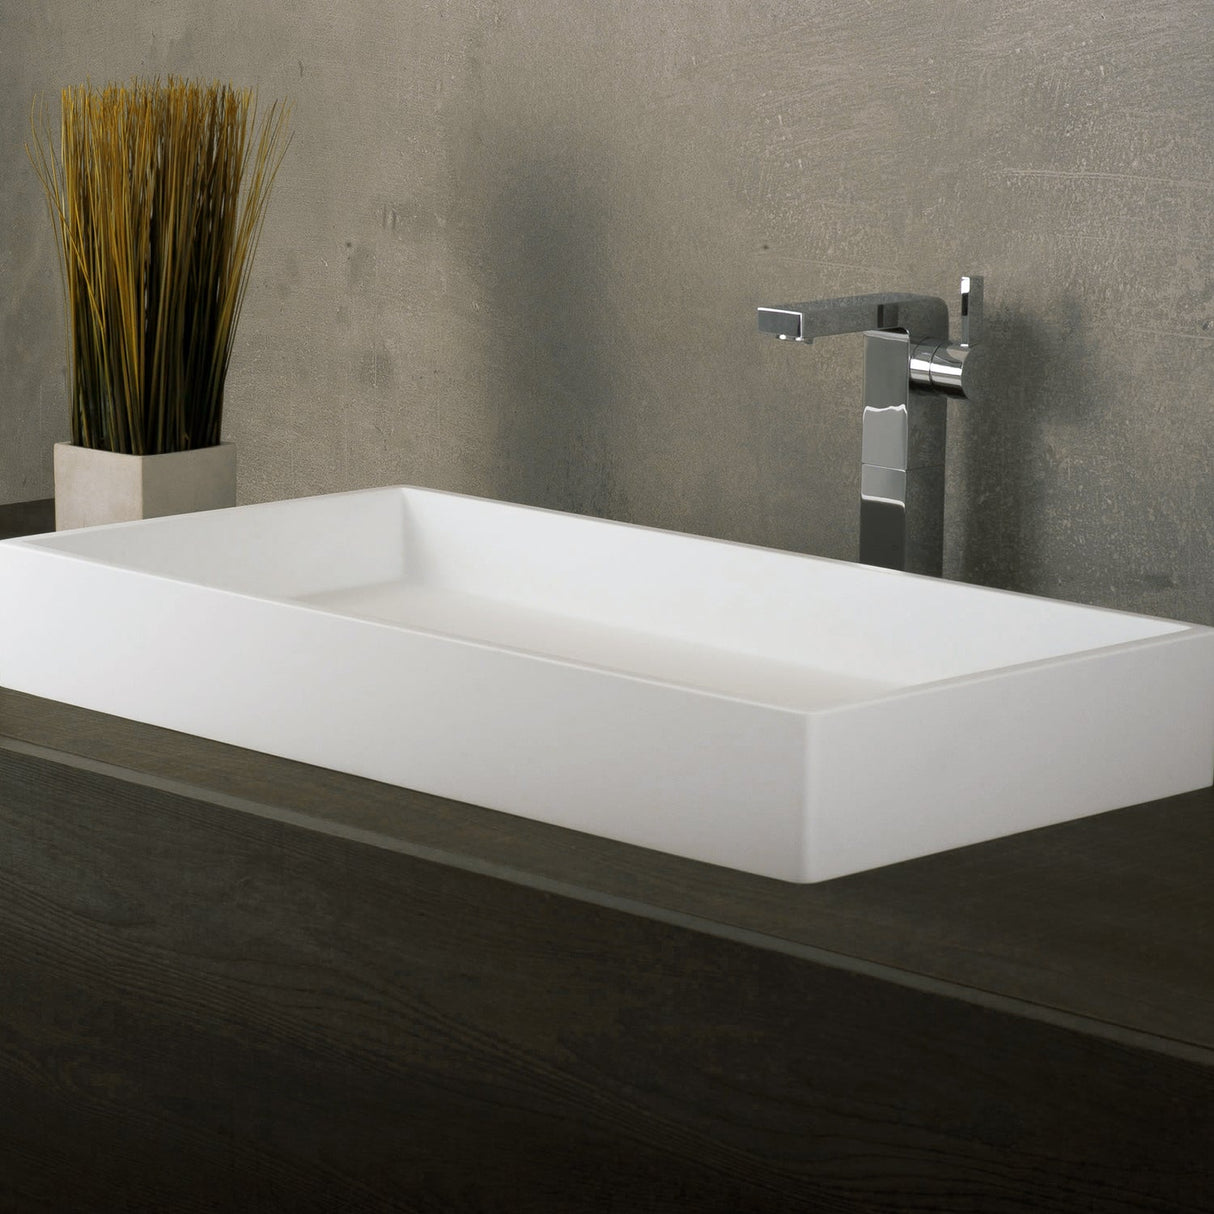 DAX Solid Surface Rectangular Single Bowl Vessel Bathroom Basin, Matte White DAX-AB-1327